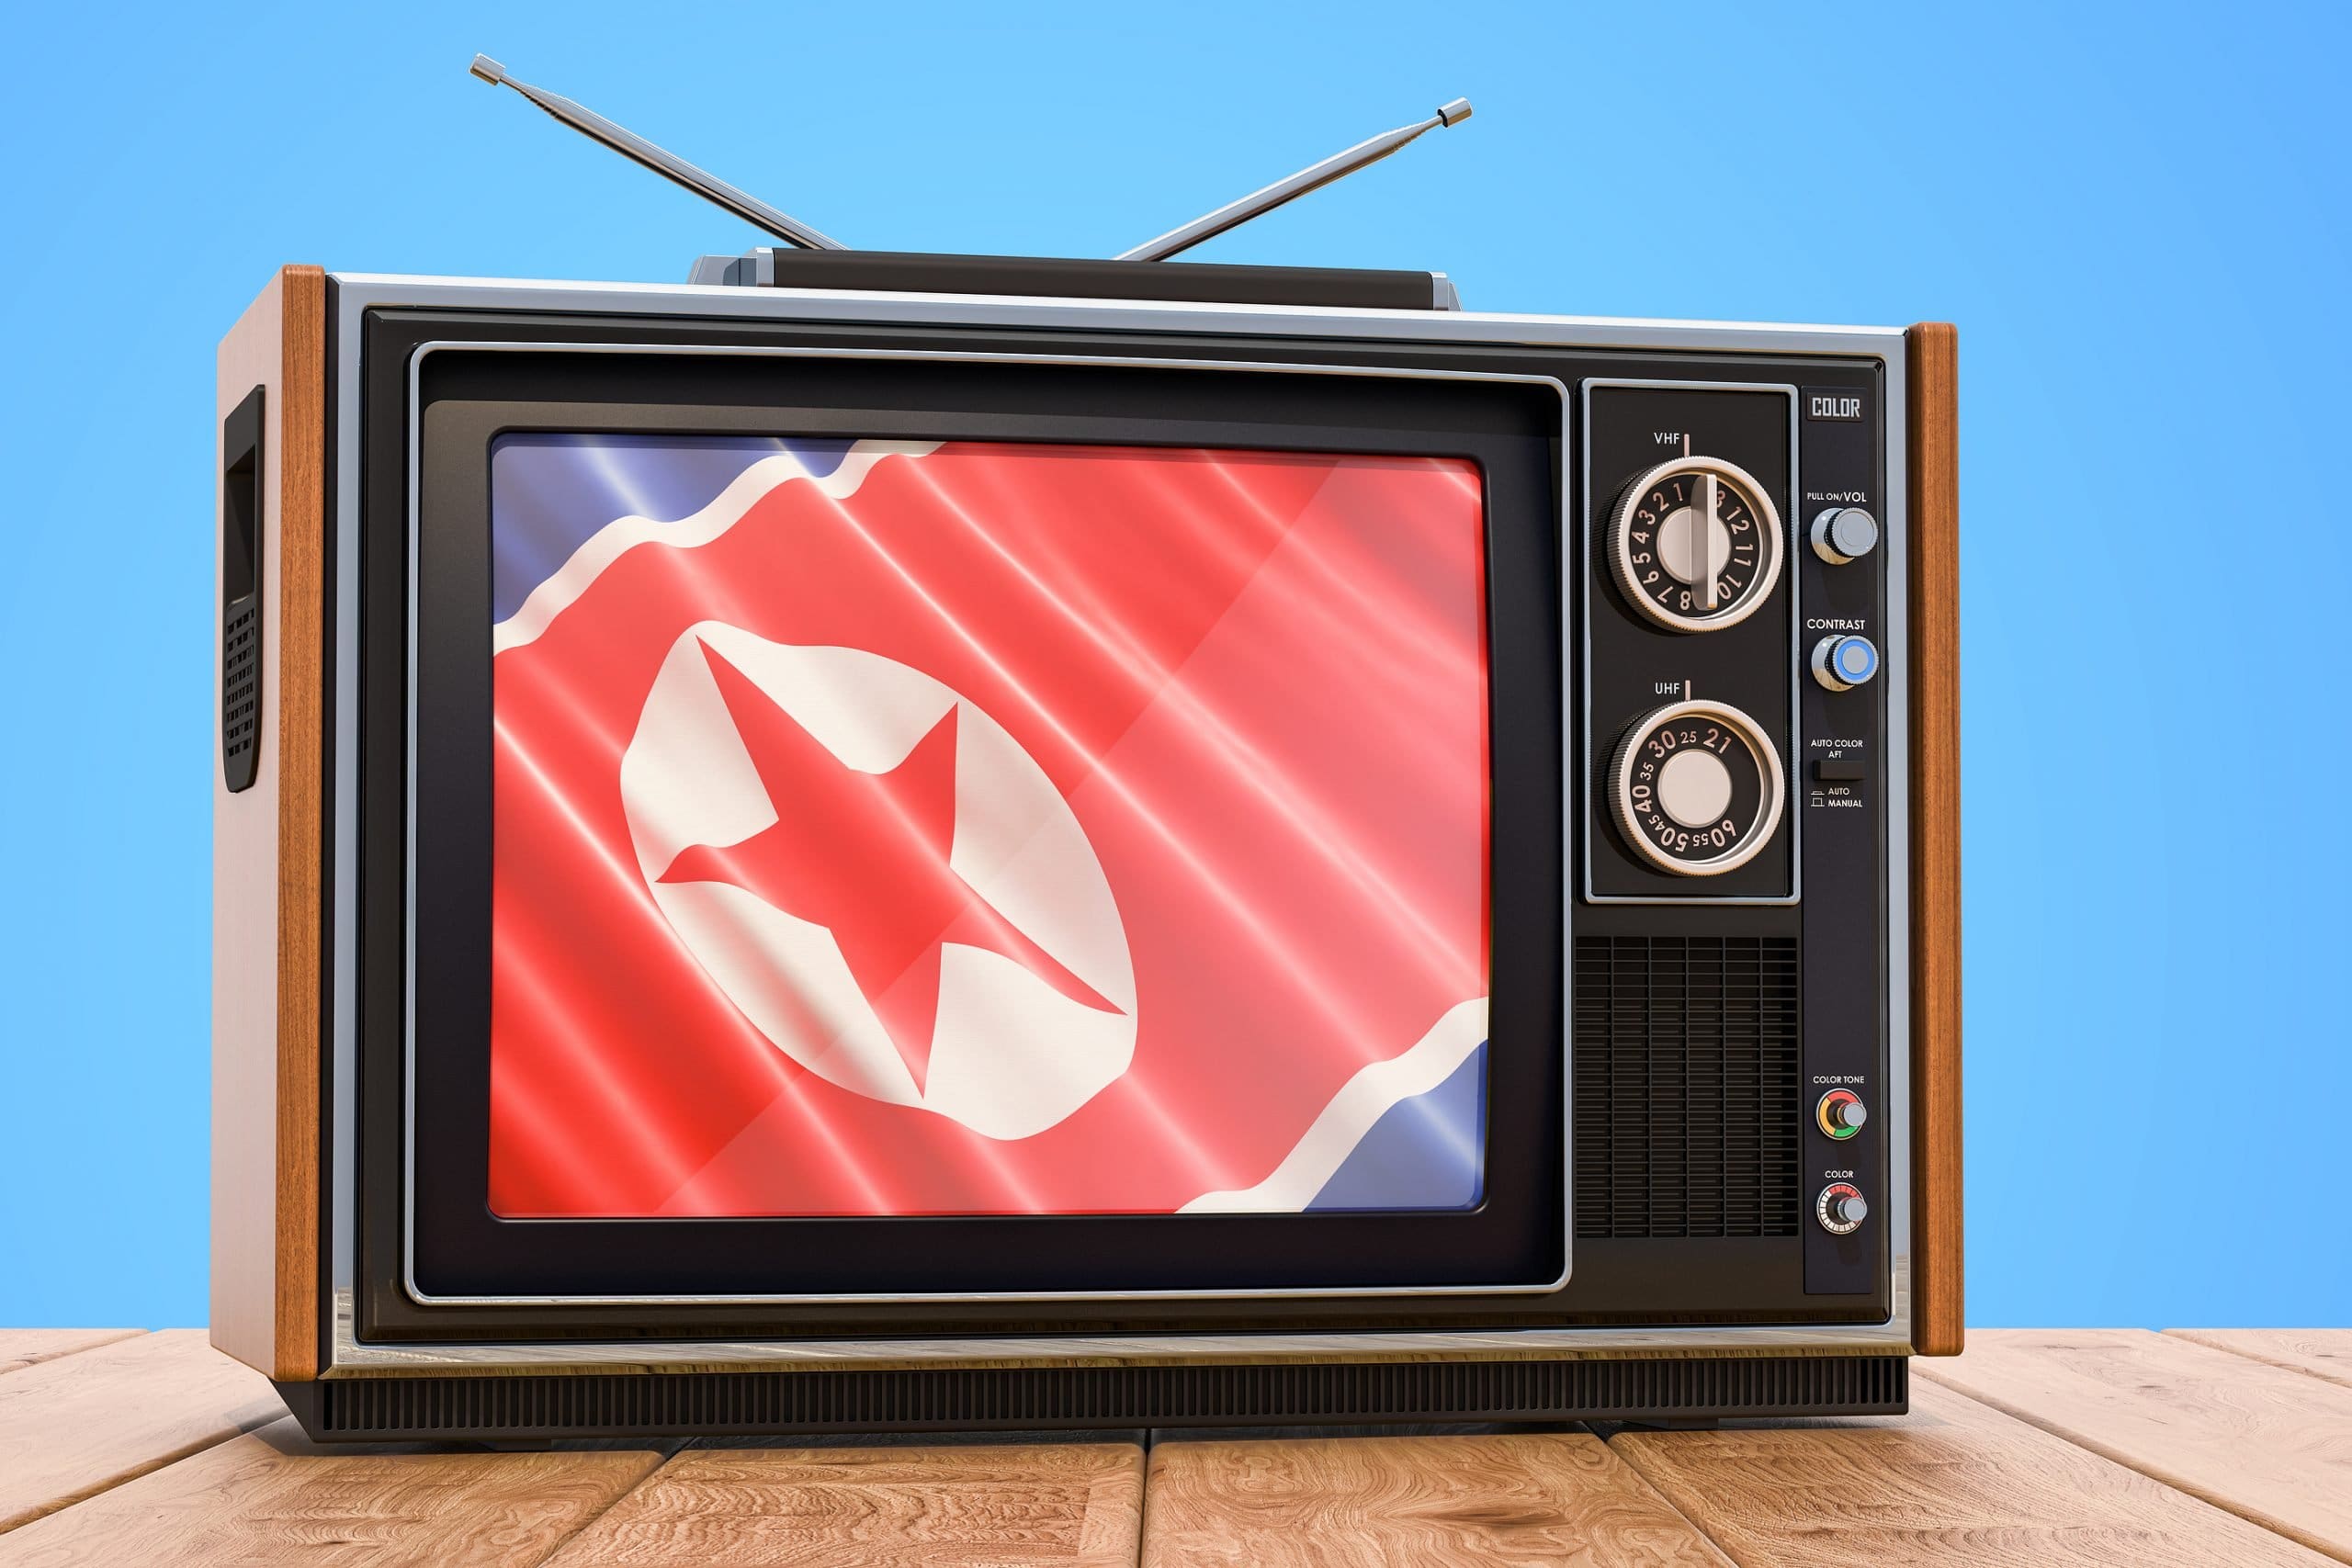 North Korea Television Concept